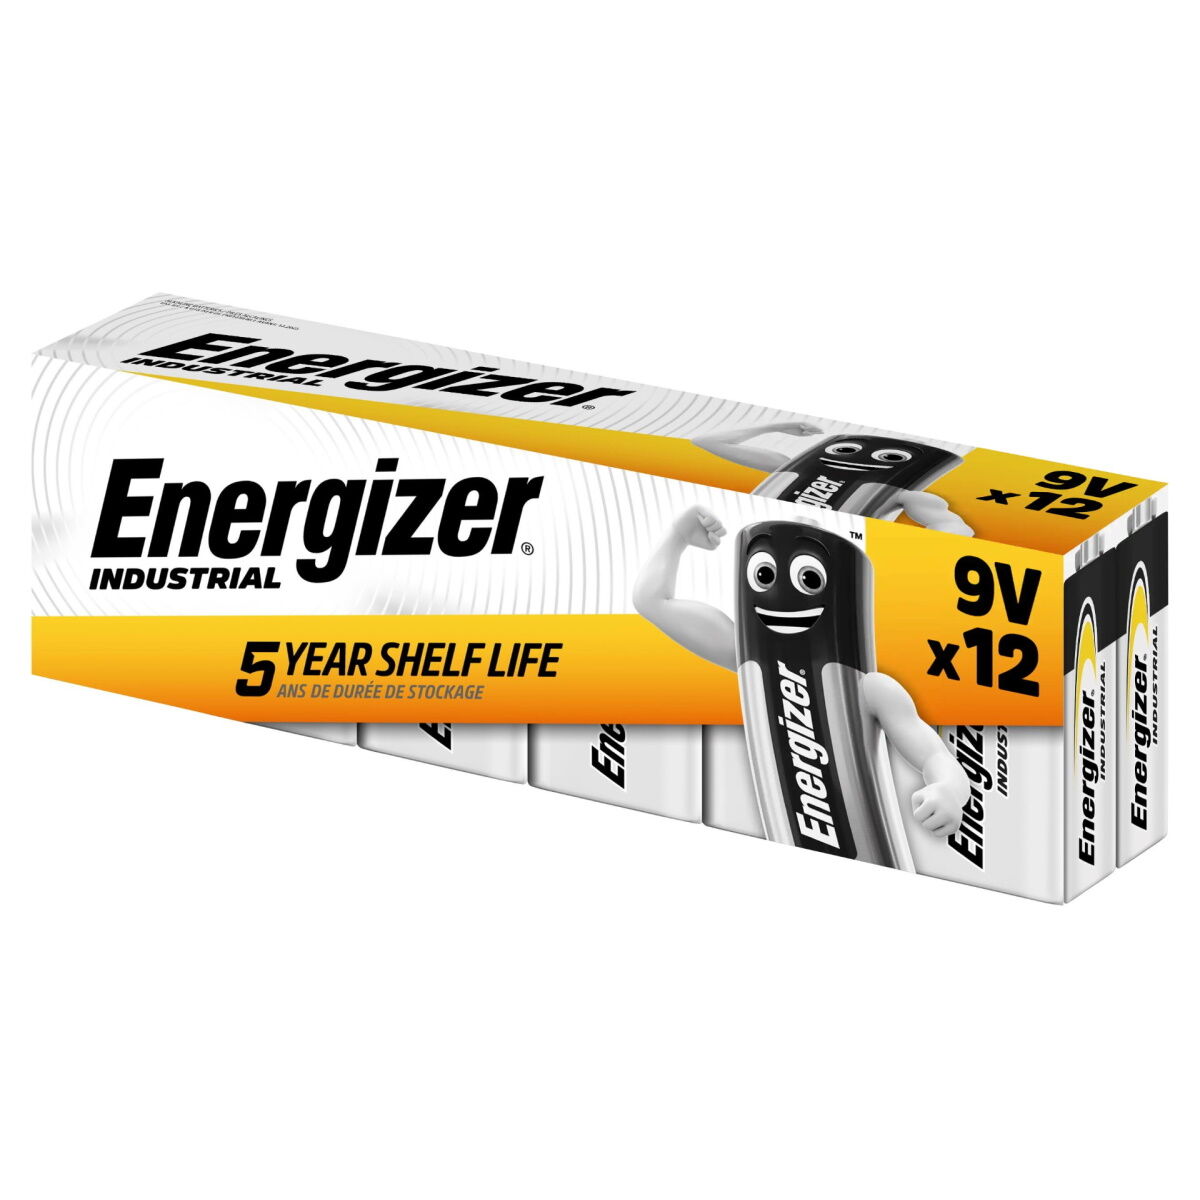 Energizer Industrial 9V Batteries (Box of 12)